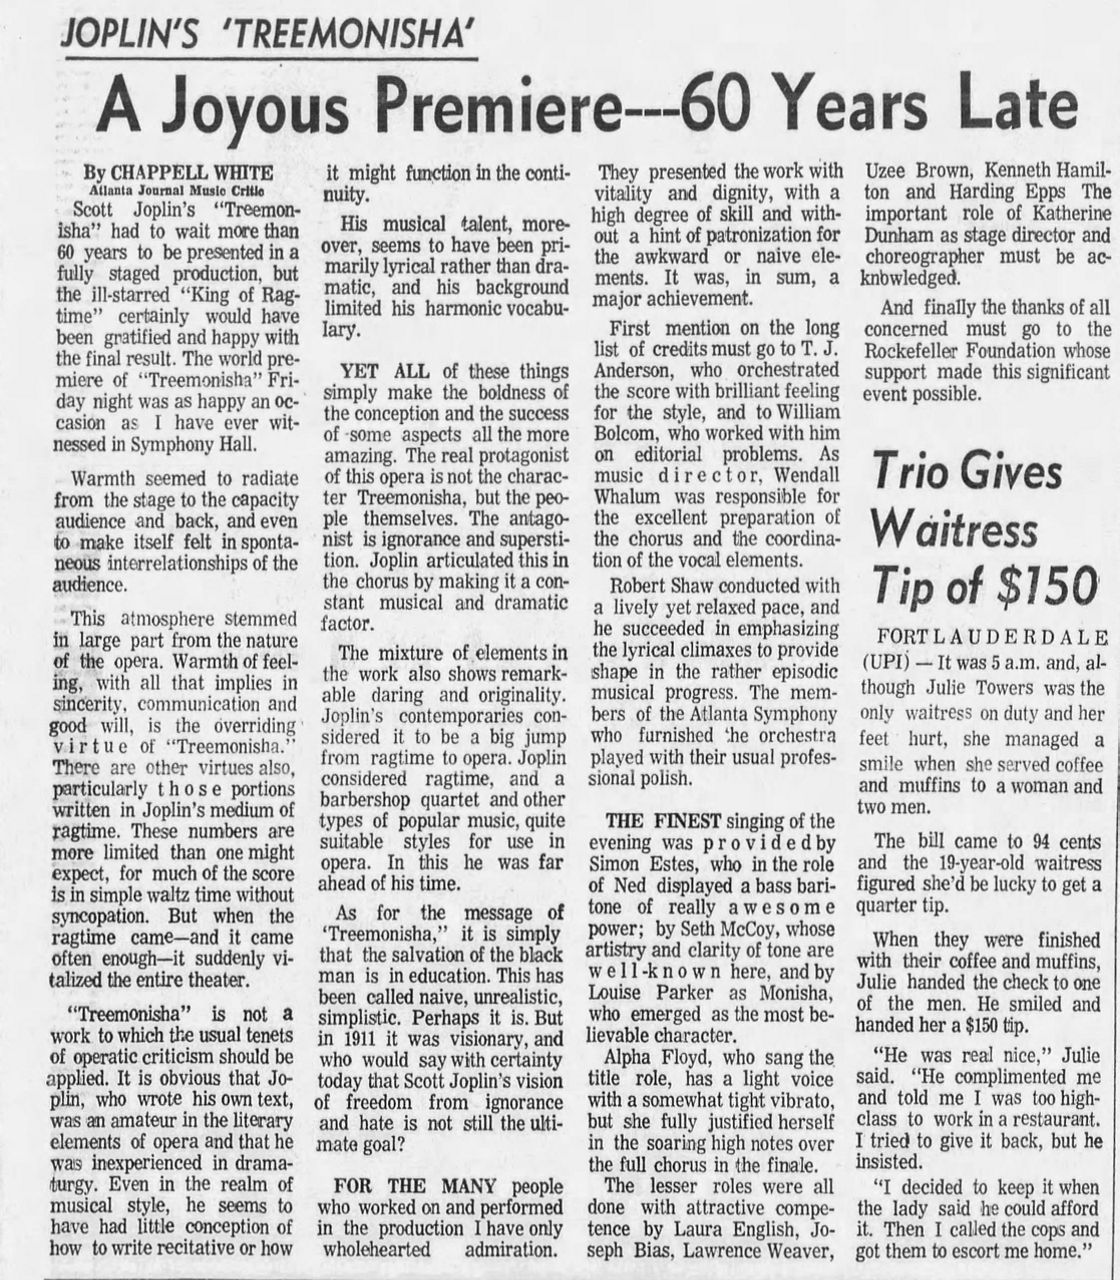 (The Atlanta Constitution, Sunday, Jan 30, 1972)